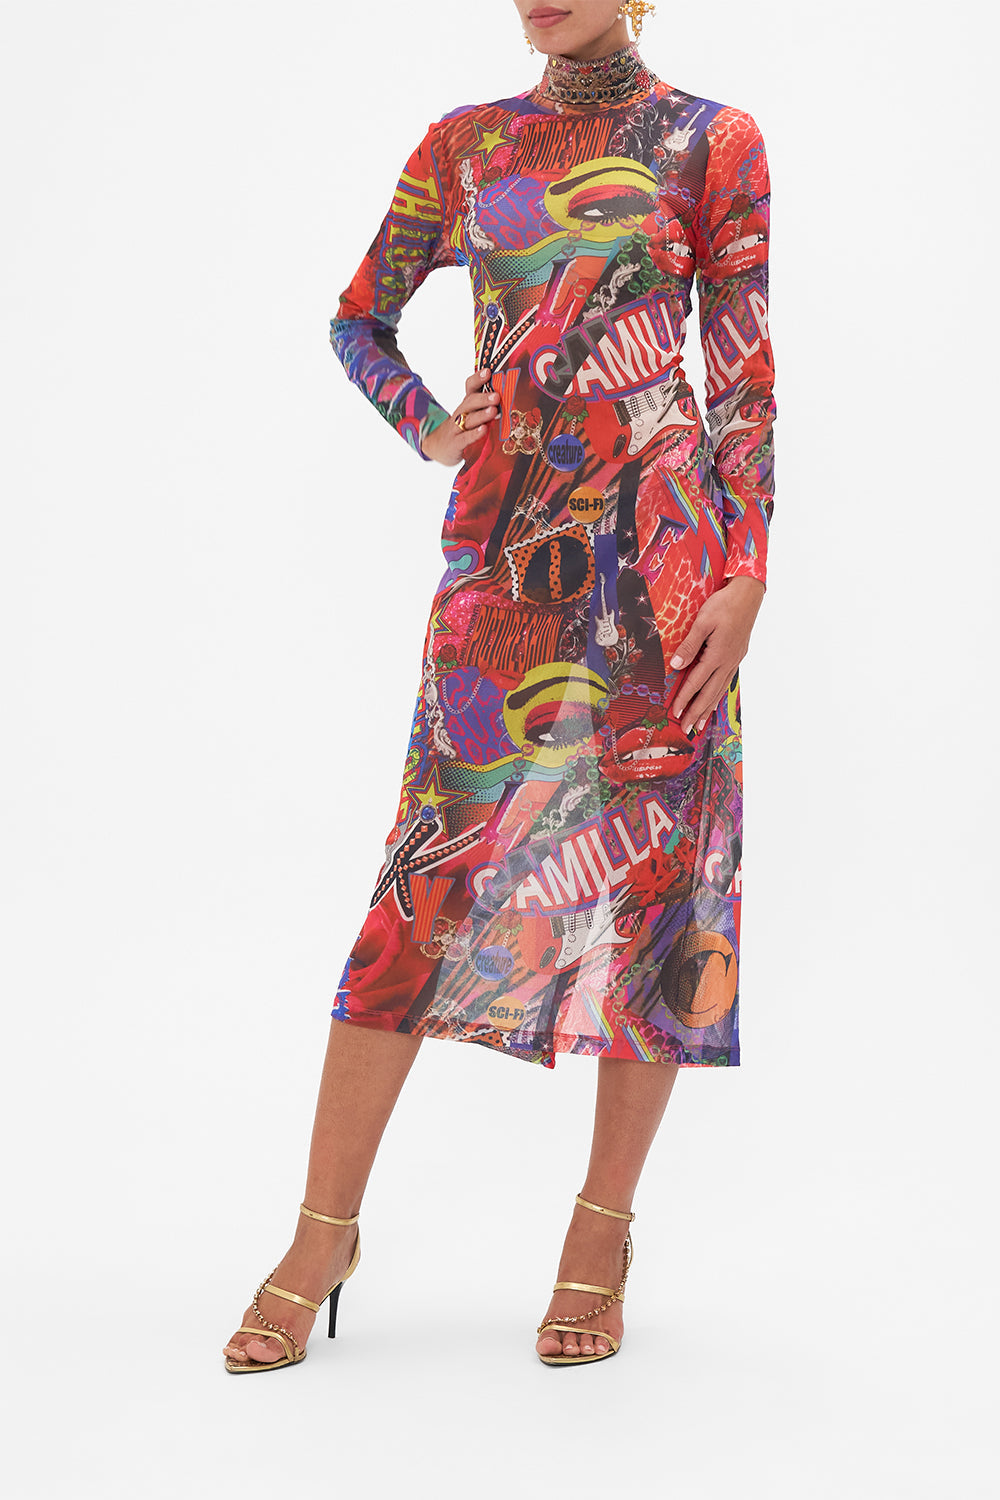 Side view of model wearing CAMILLA mesh turtleneck dress in multicoloured Radical Rebirth print